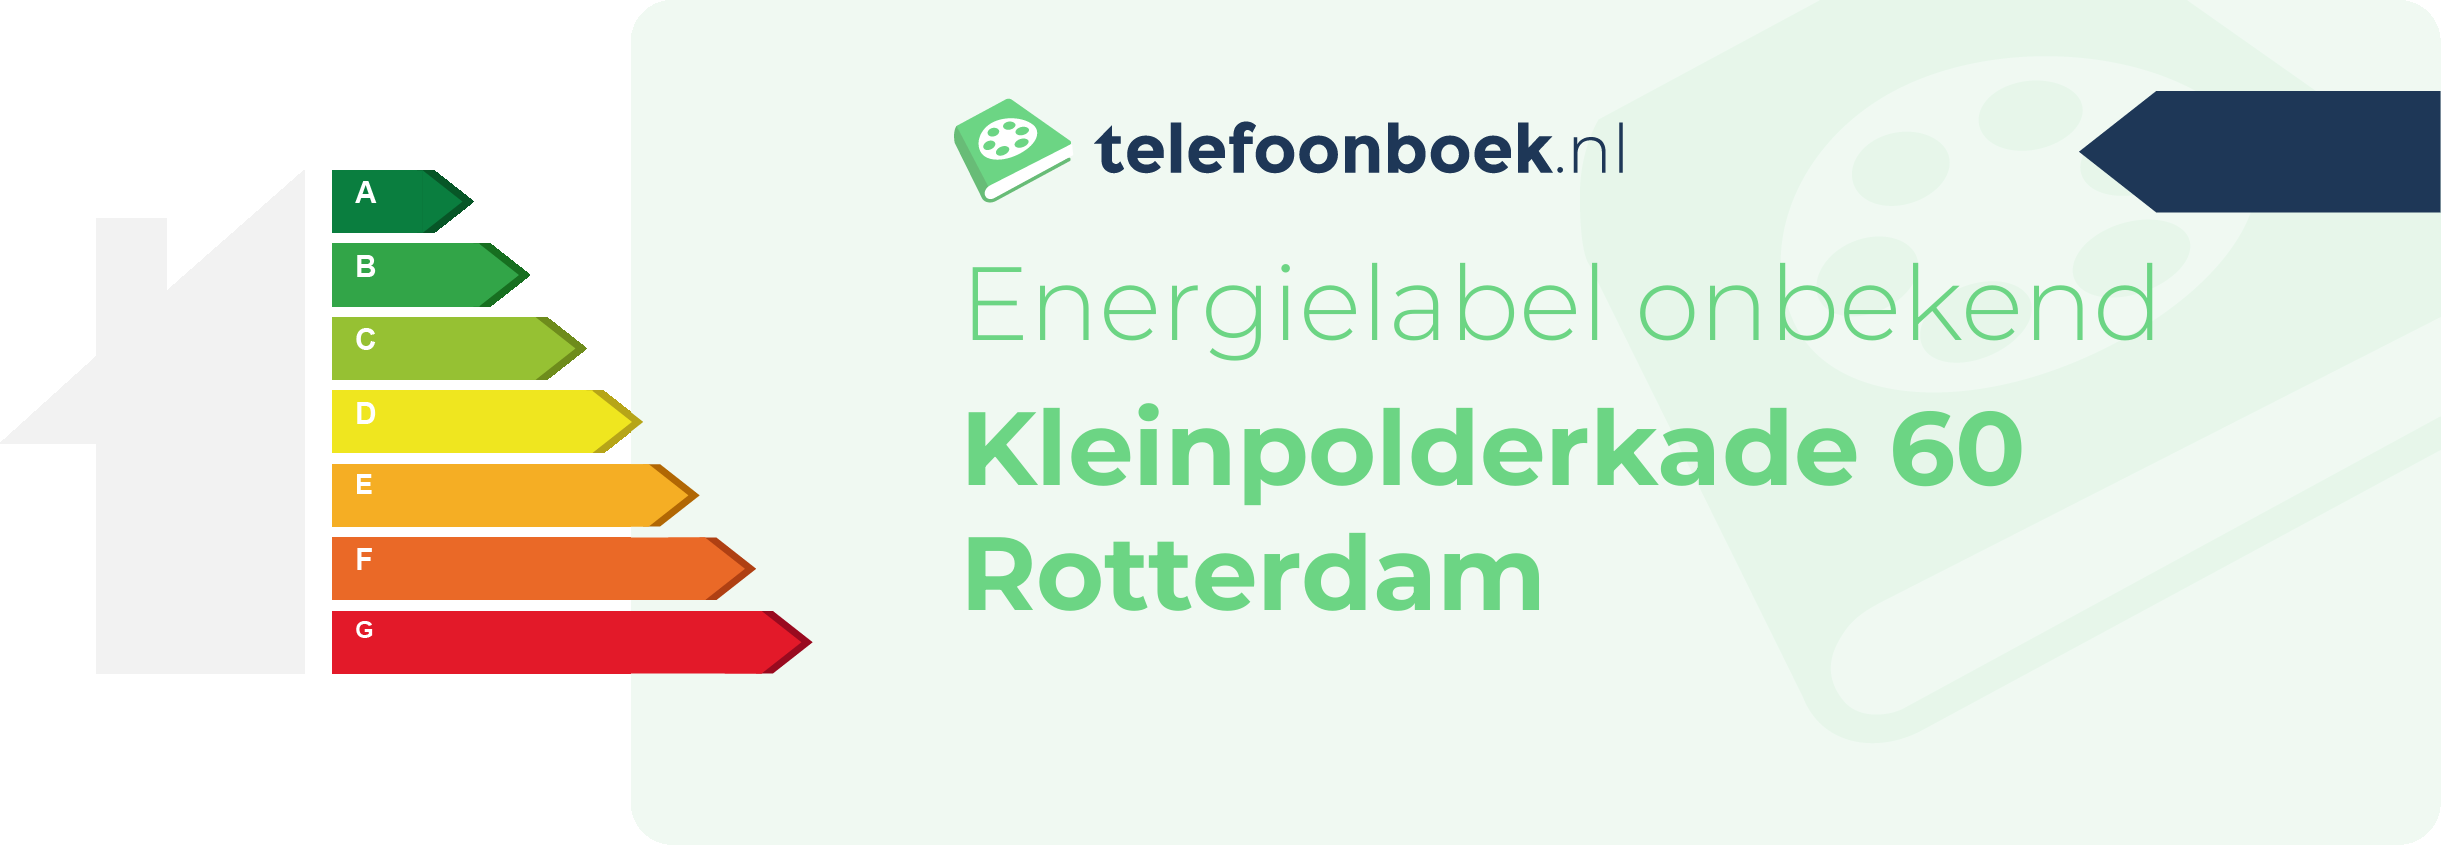 Energielabel Kleinpolderkade 60 Rotterdam